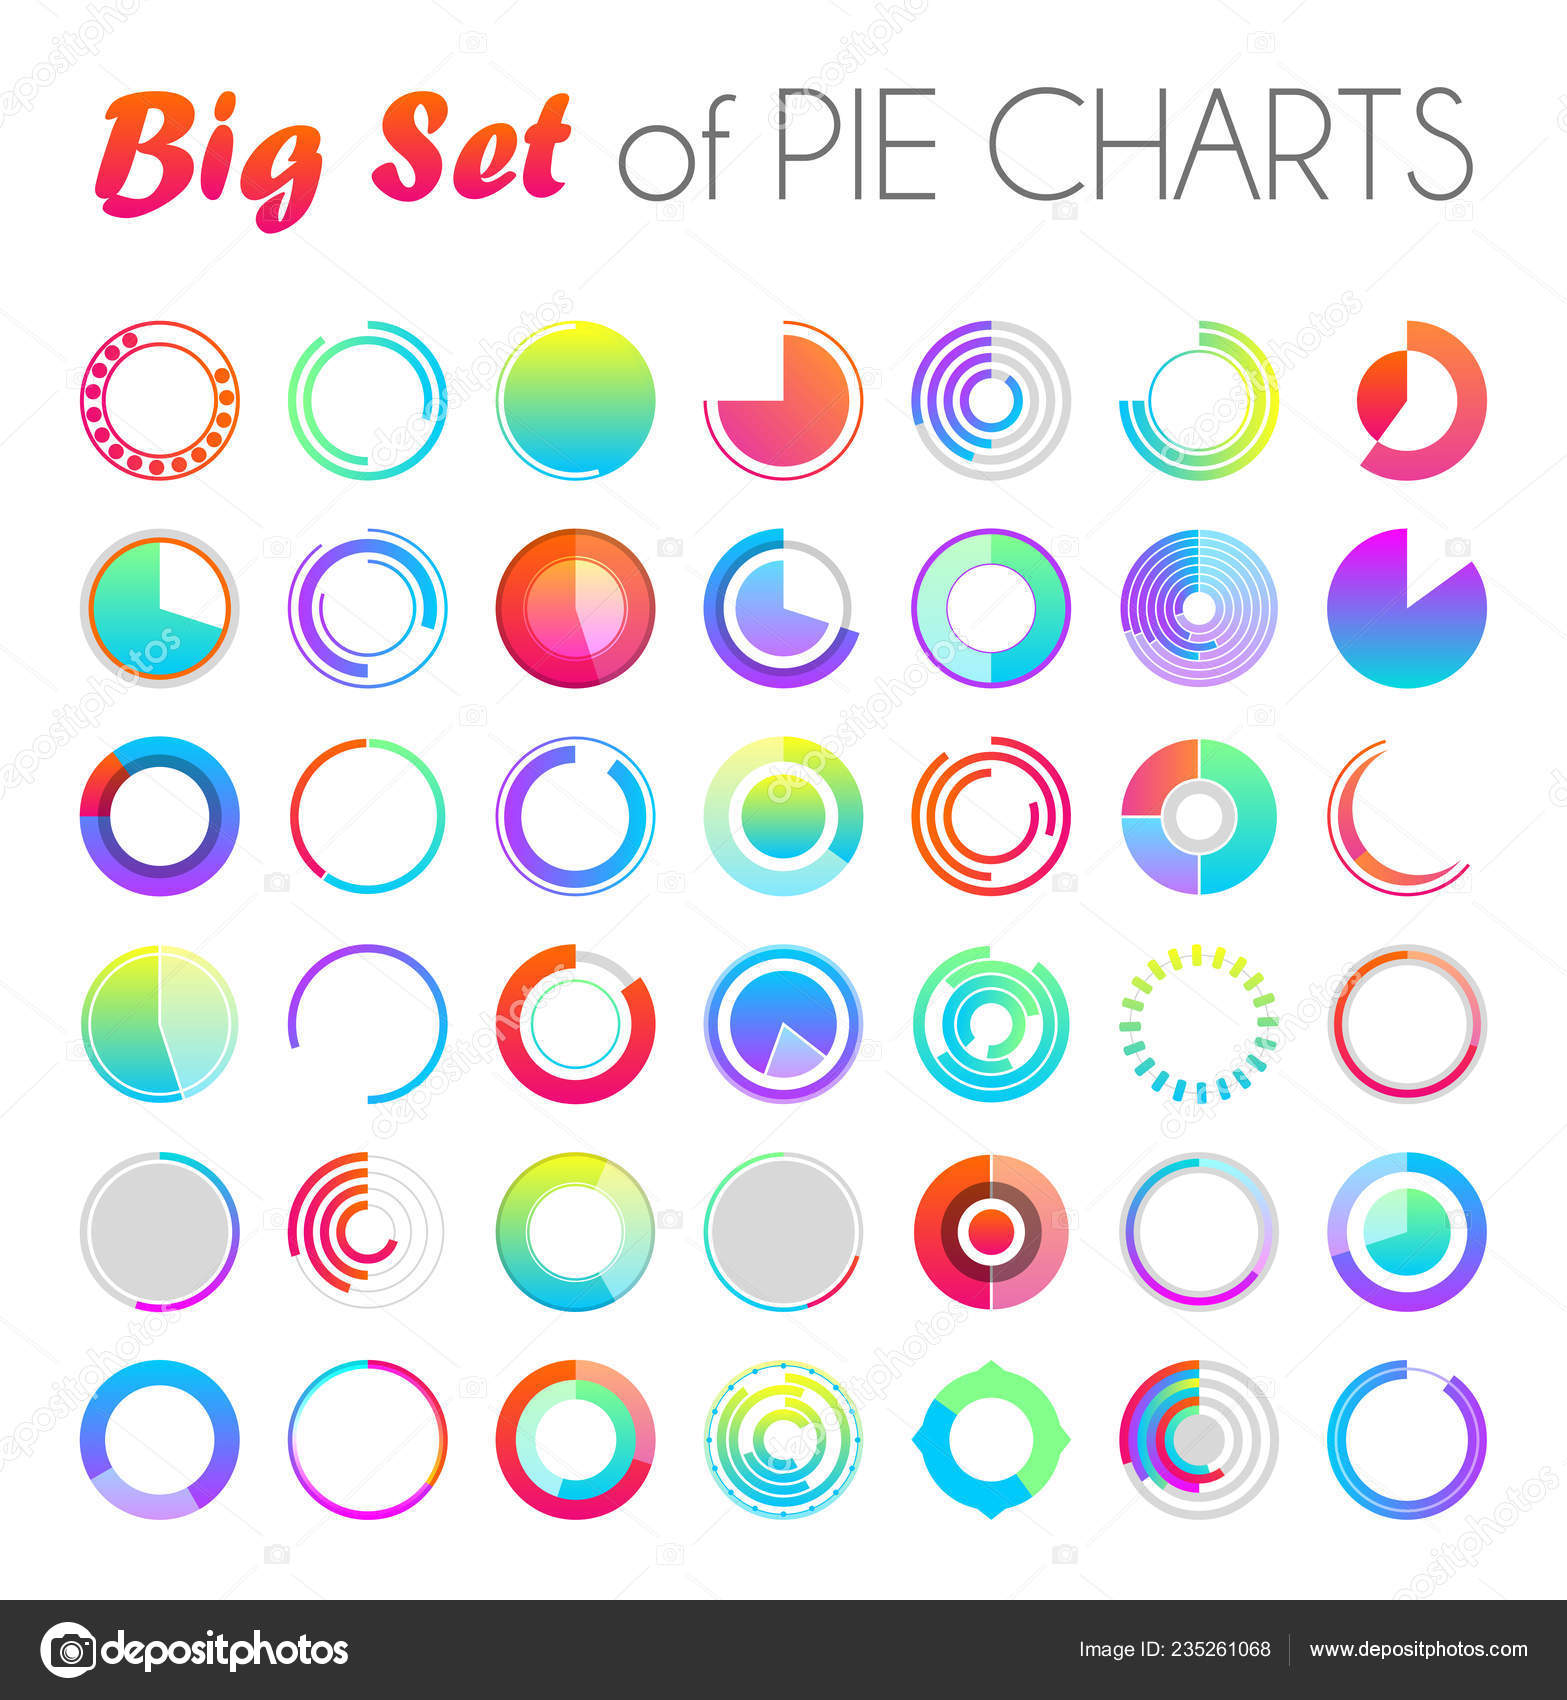 Pie Chart Data Visualization